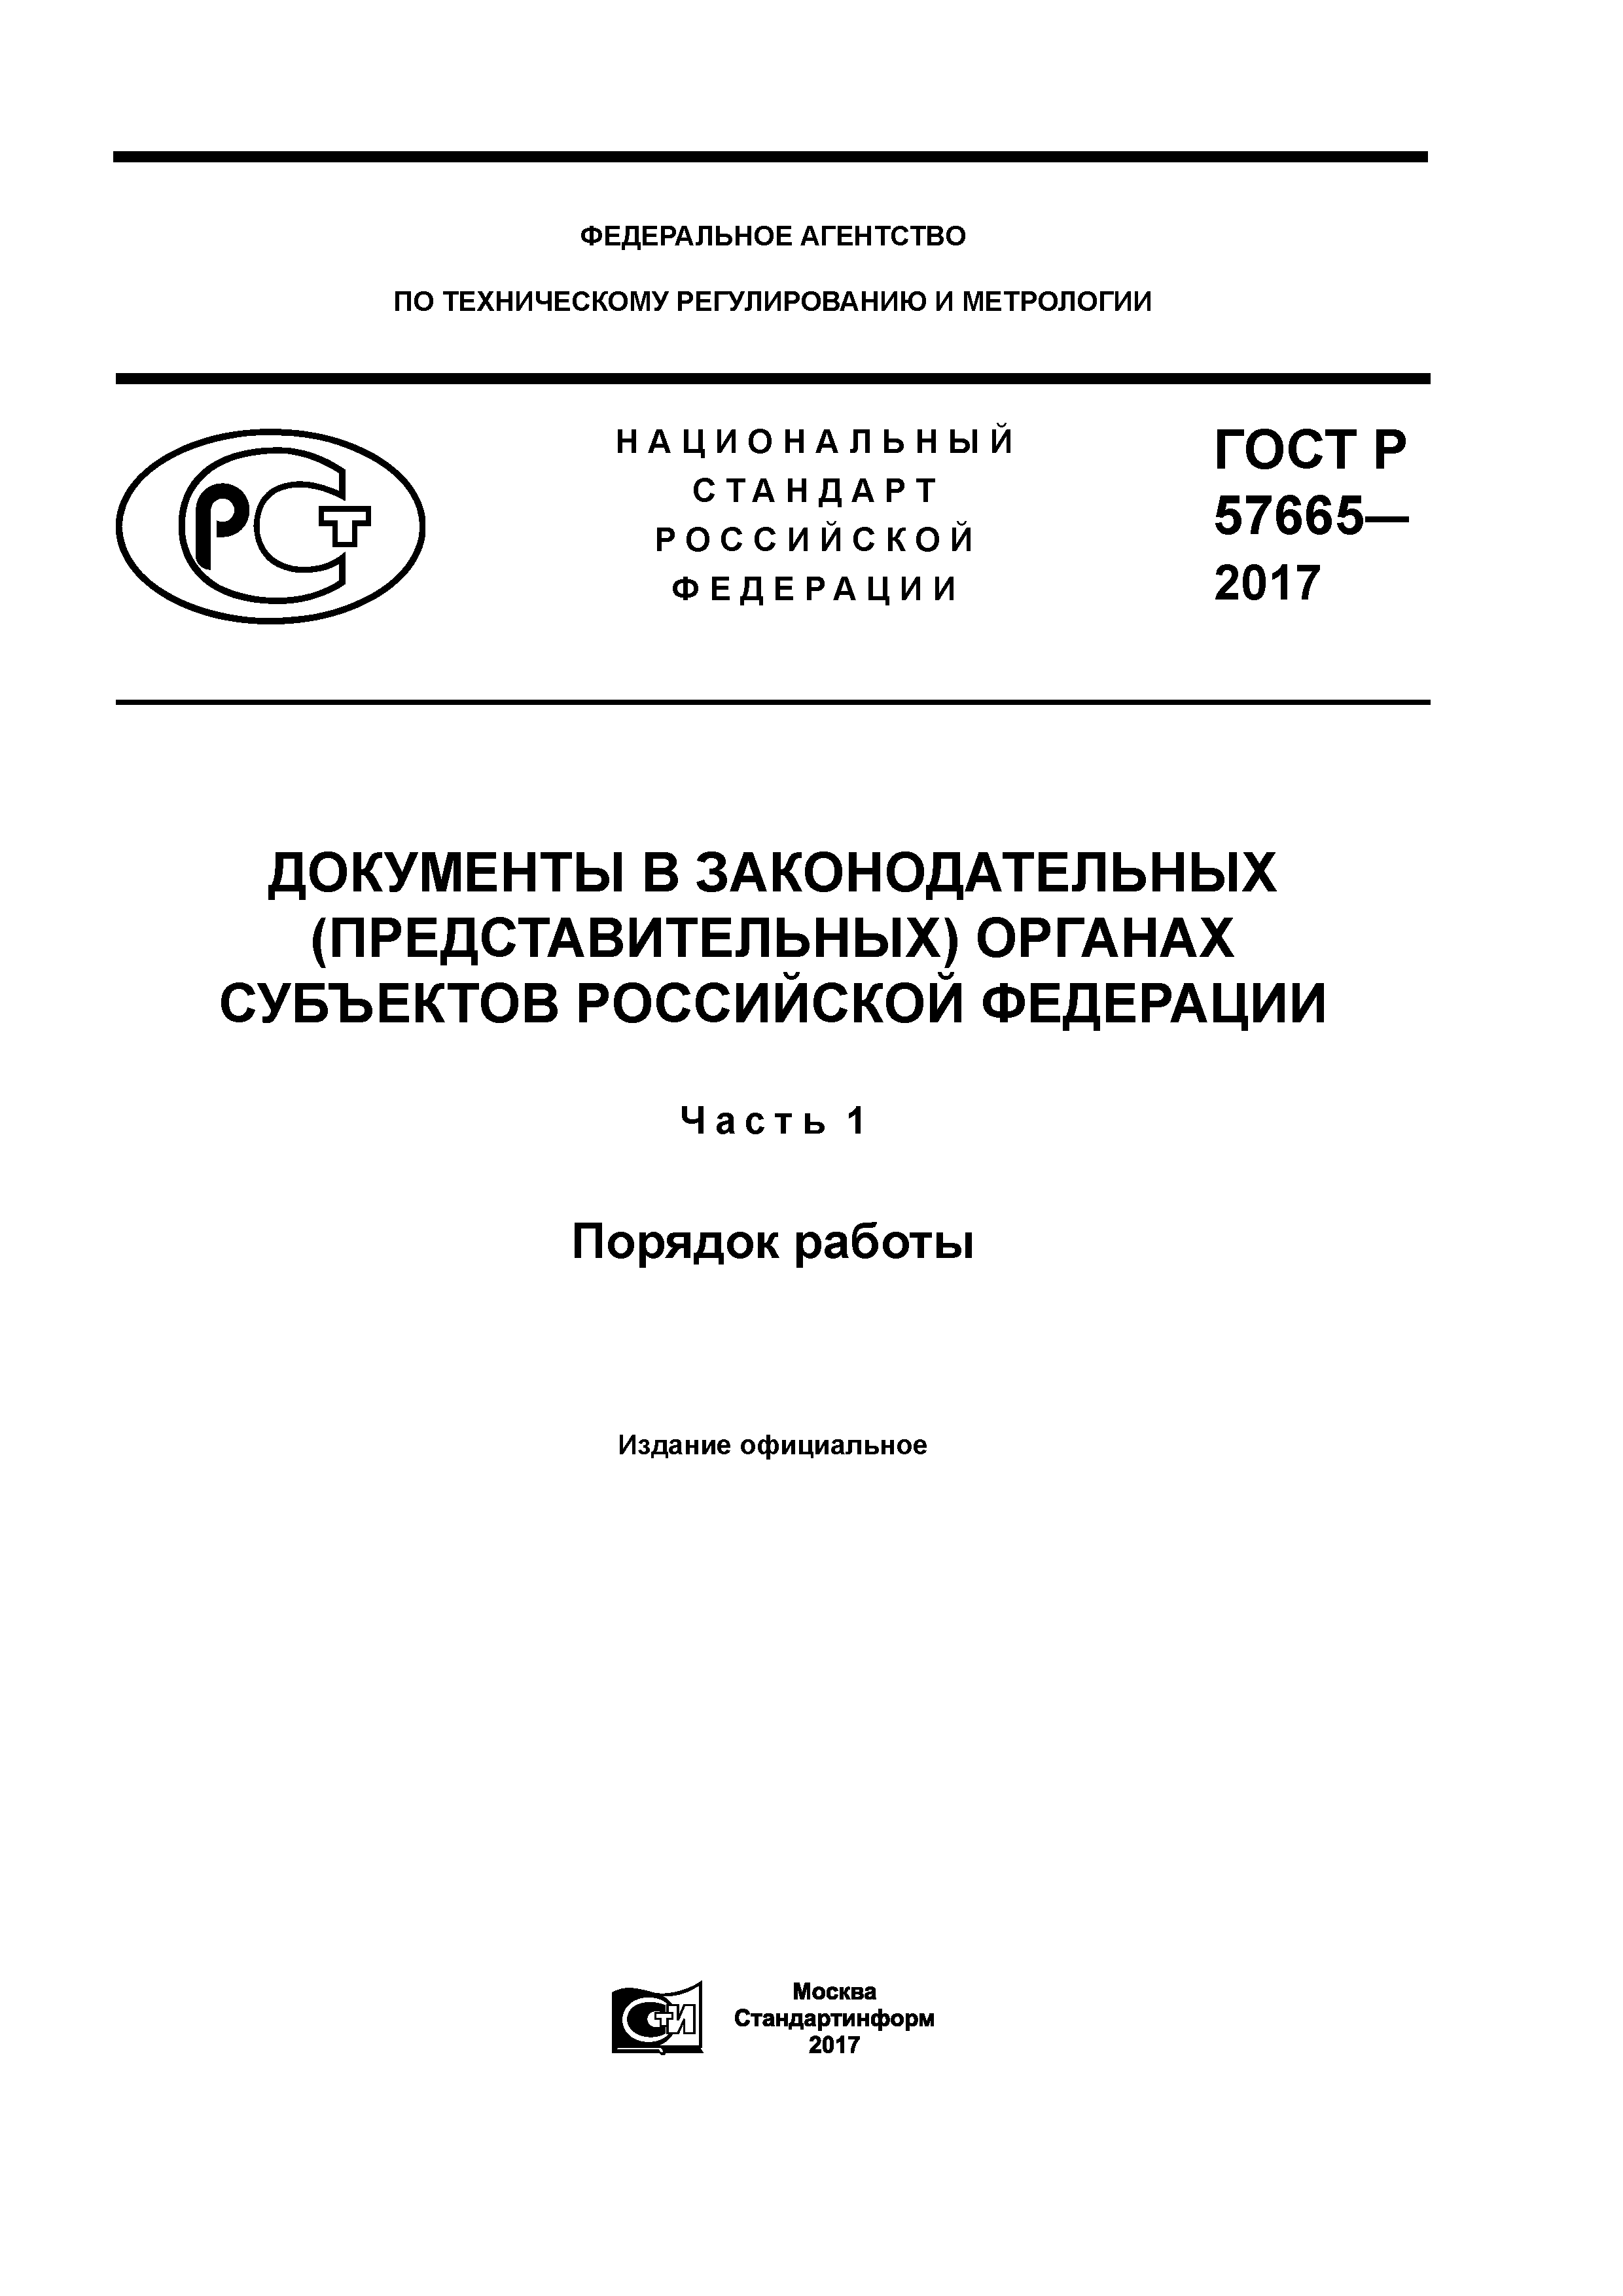 ГОСТ Р 57665-2017